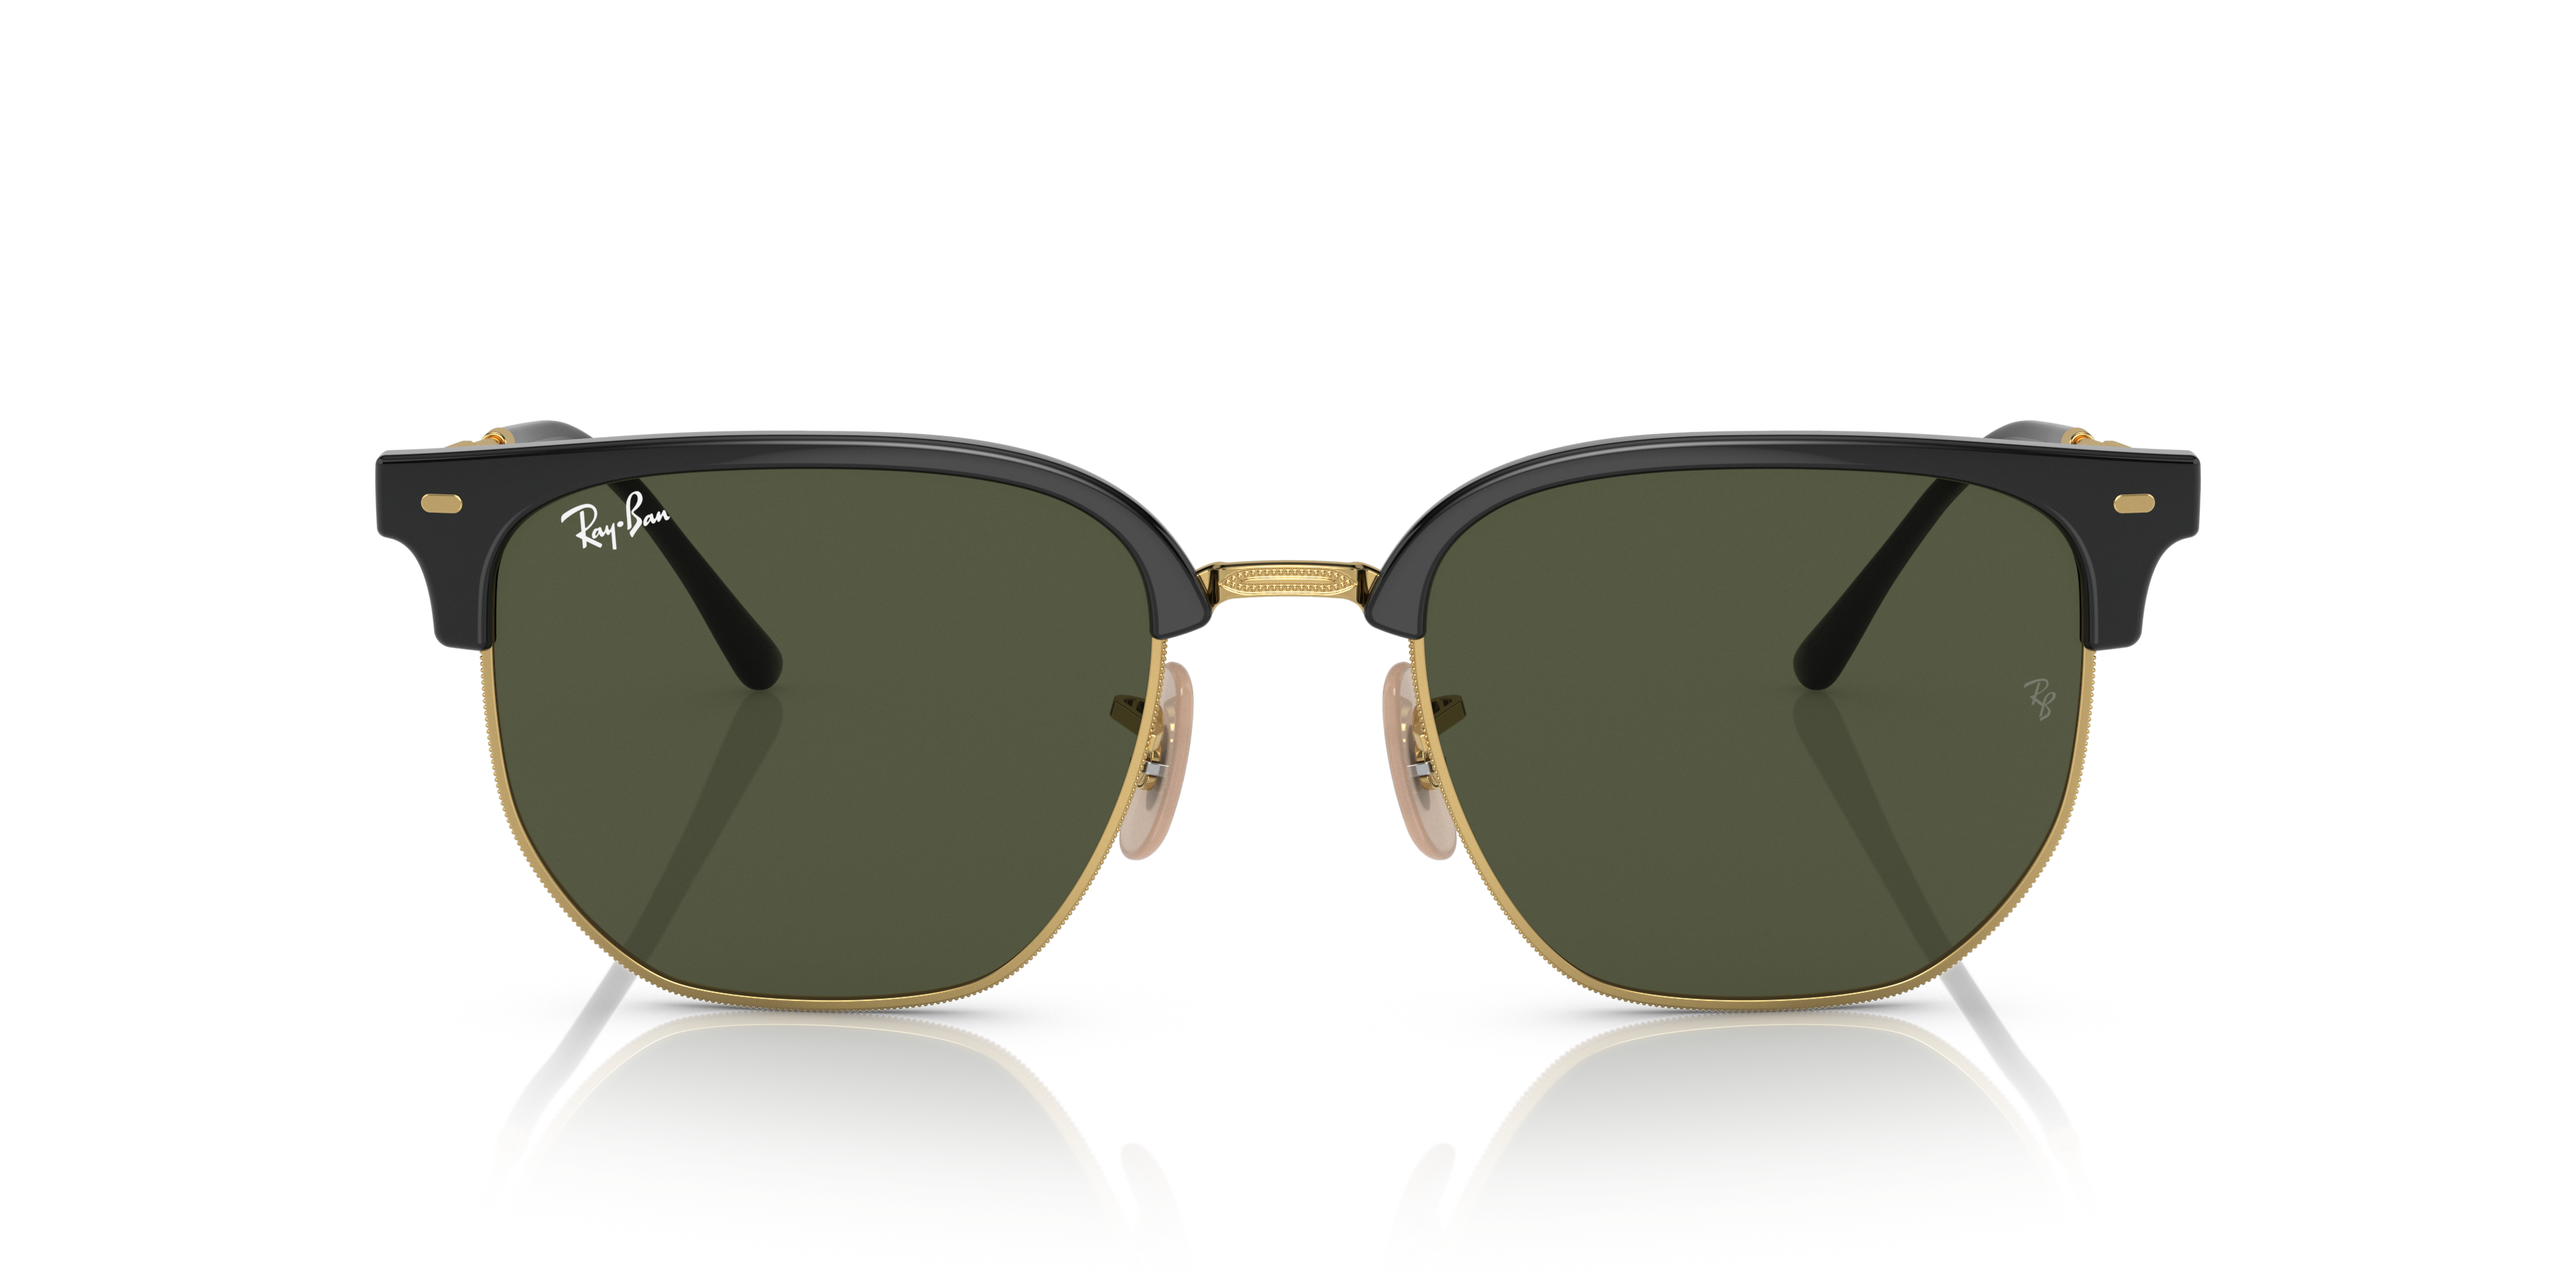 Monkstory Urban Unisex Wayfarer Sunglasses - Tortoise and Gold